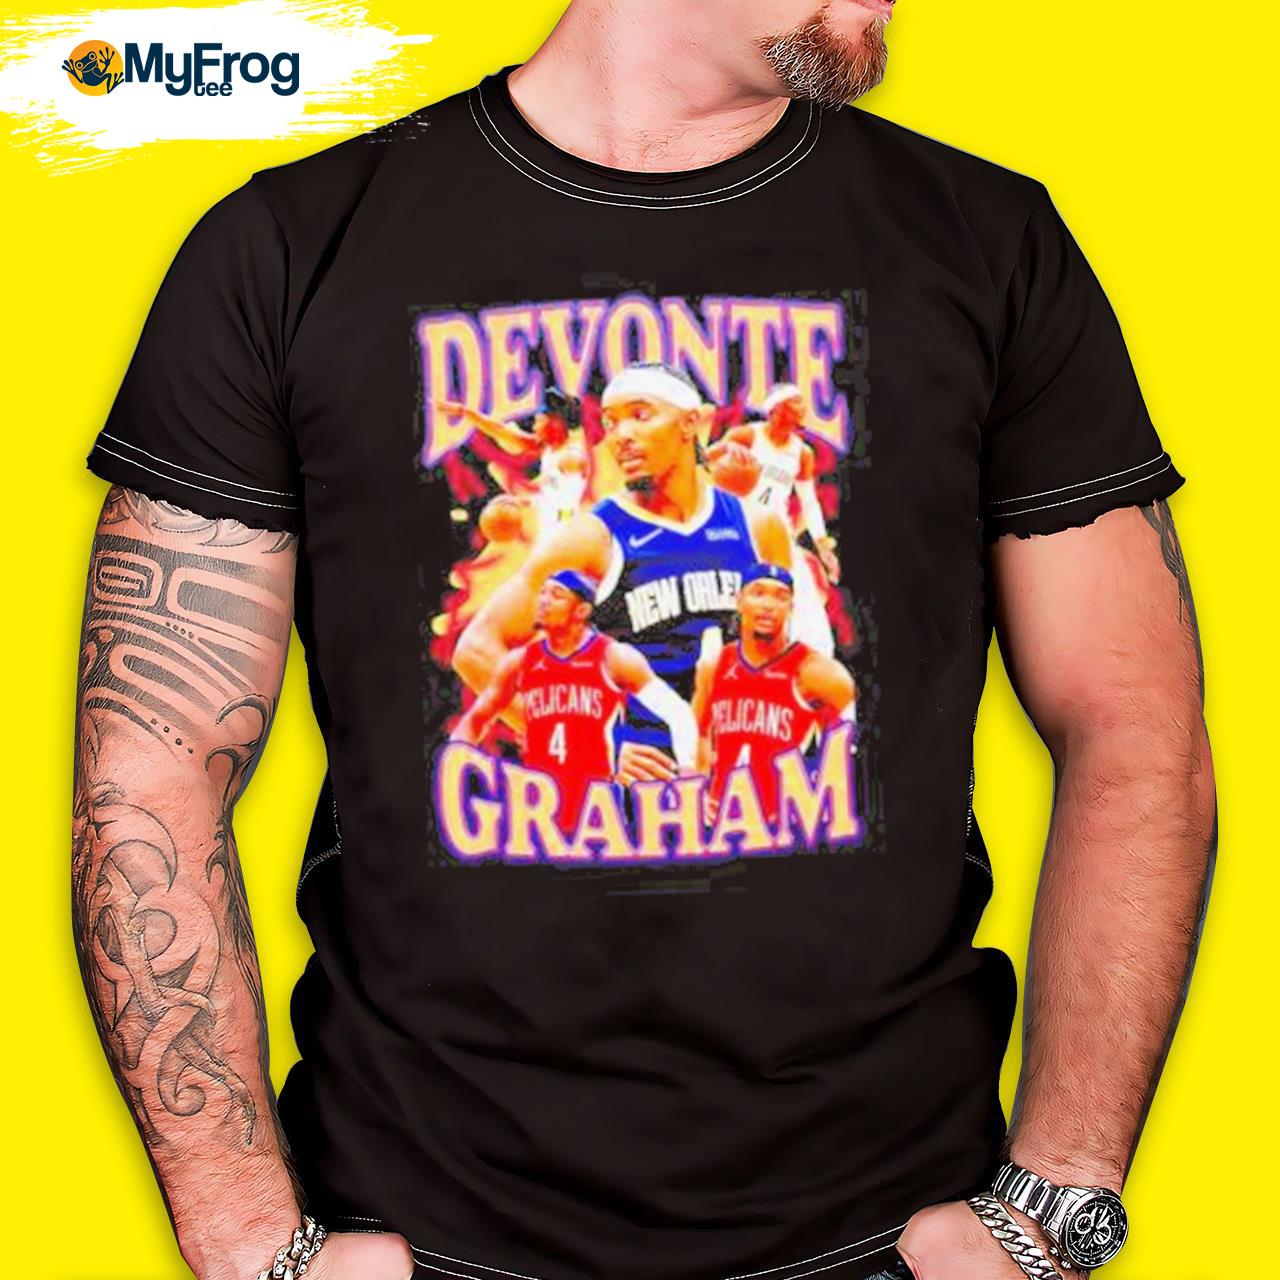 Devonte Graham Graphic shirt